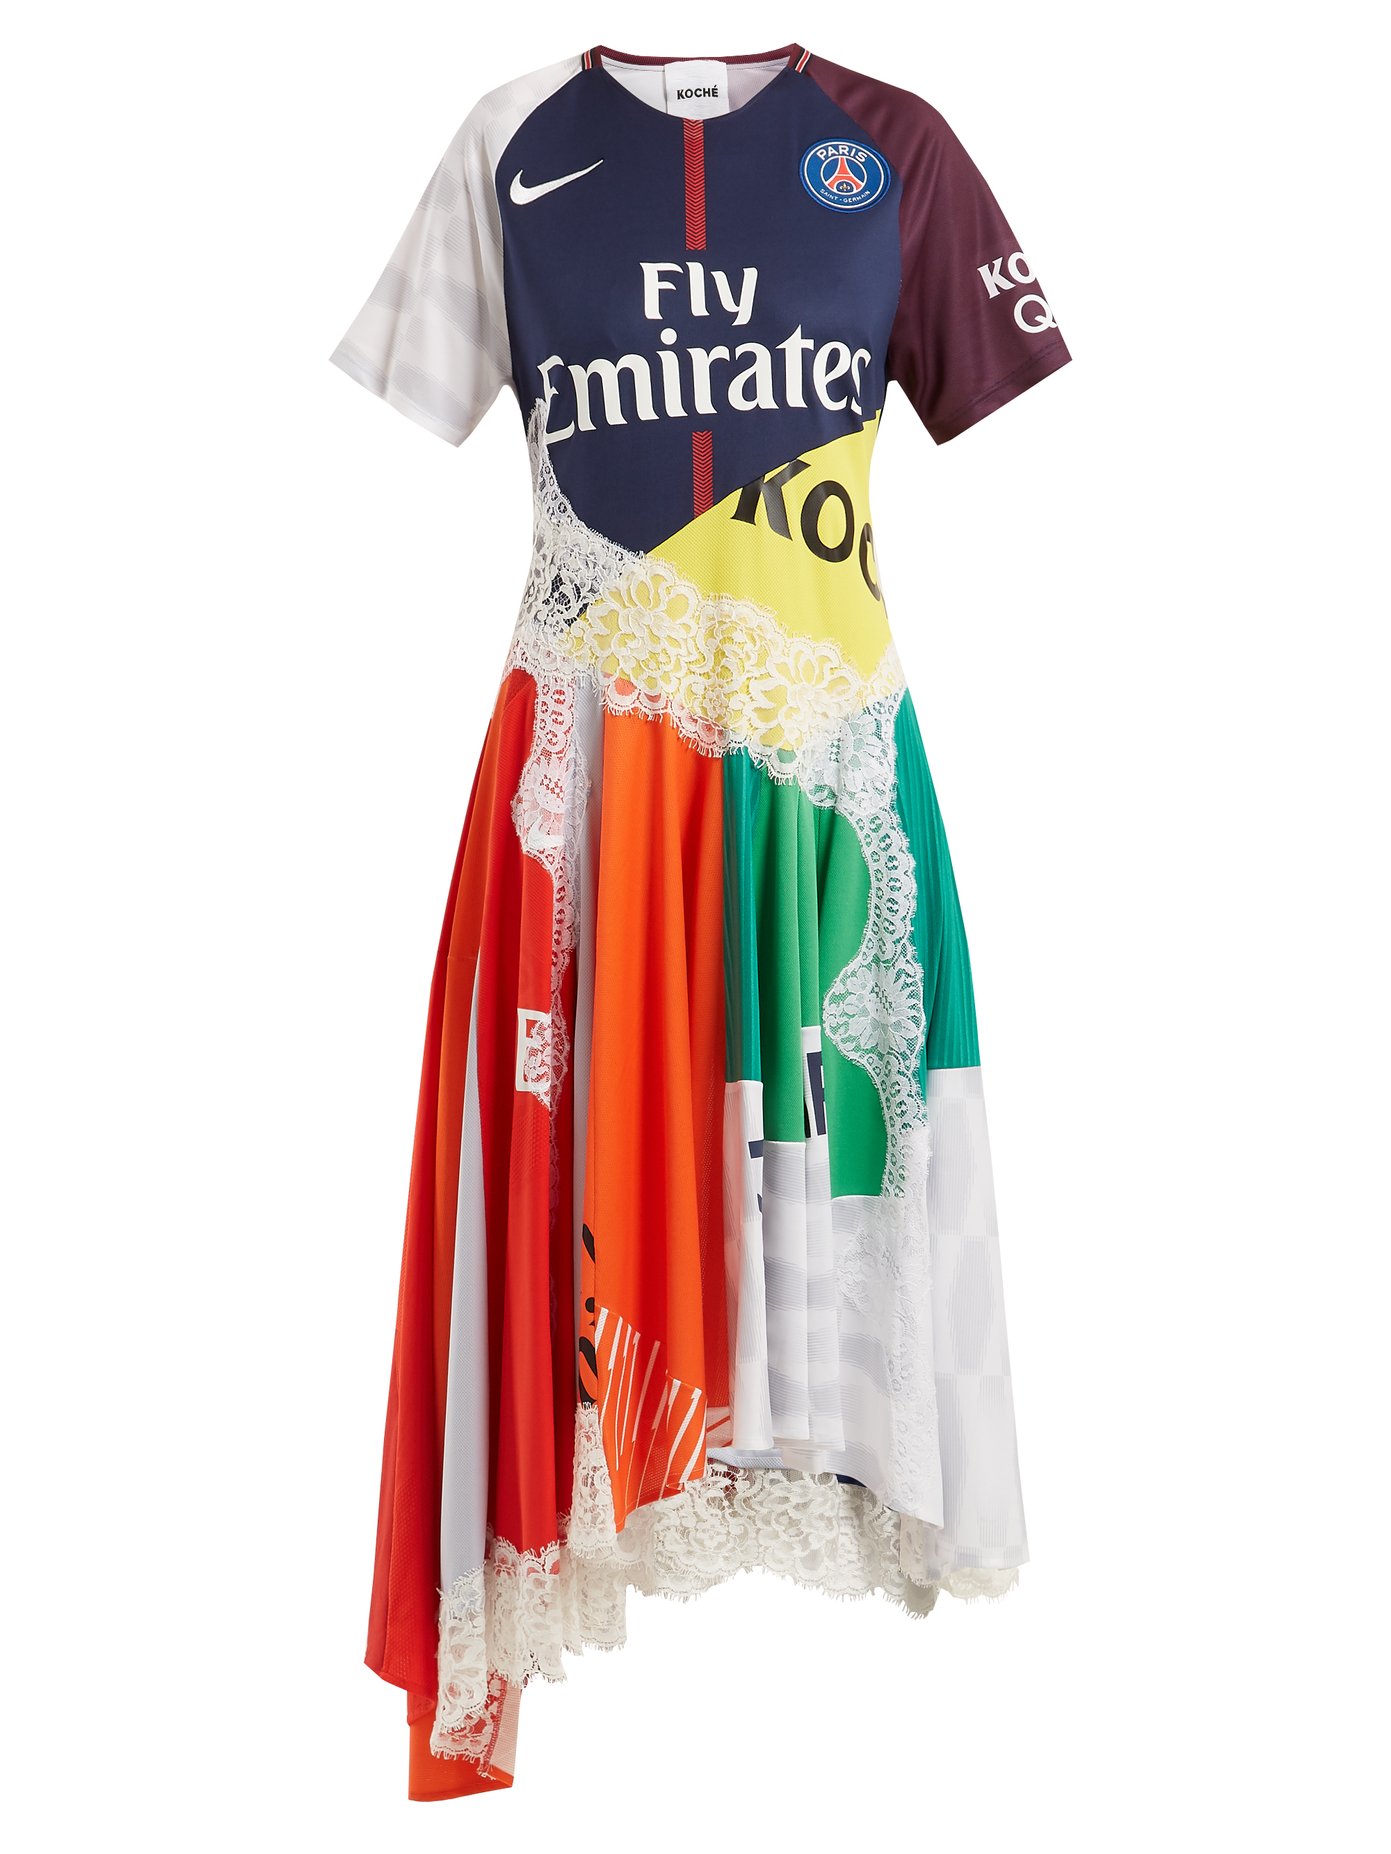 Koché X Paris Saint-Germain patchwork dress